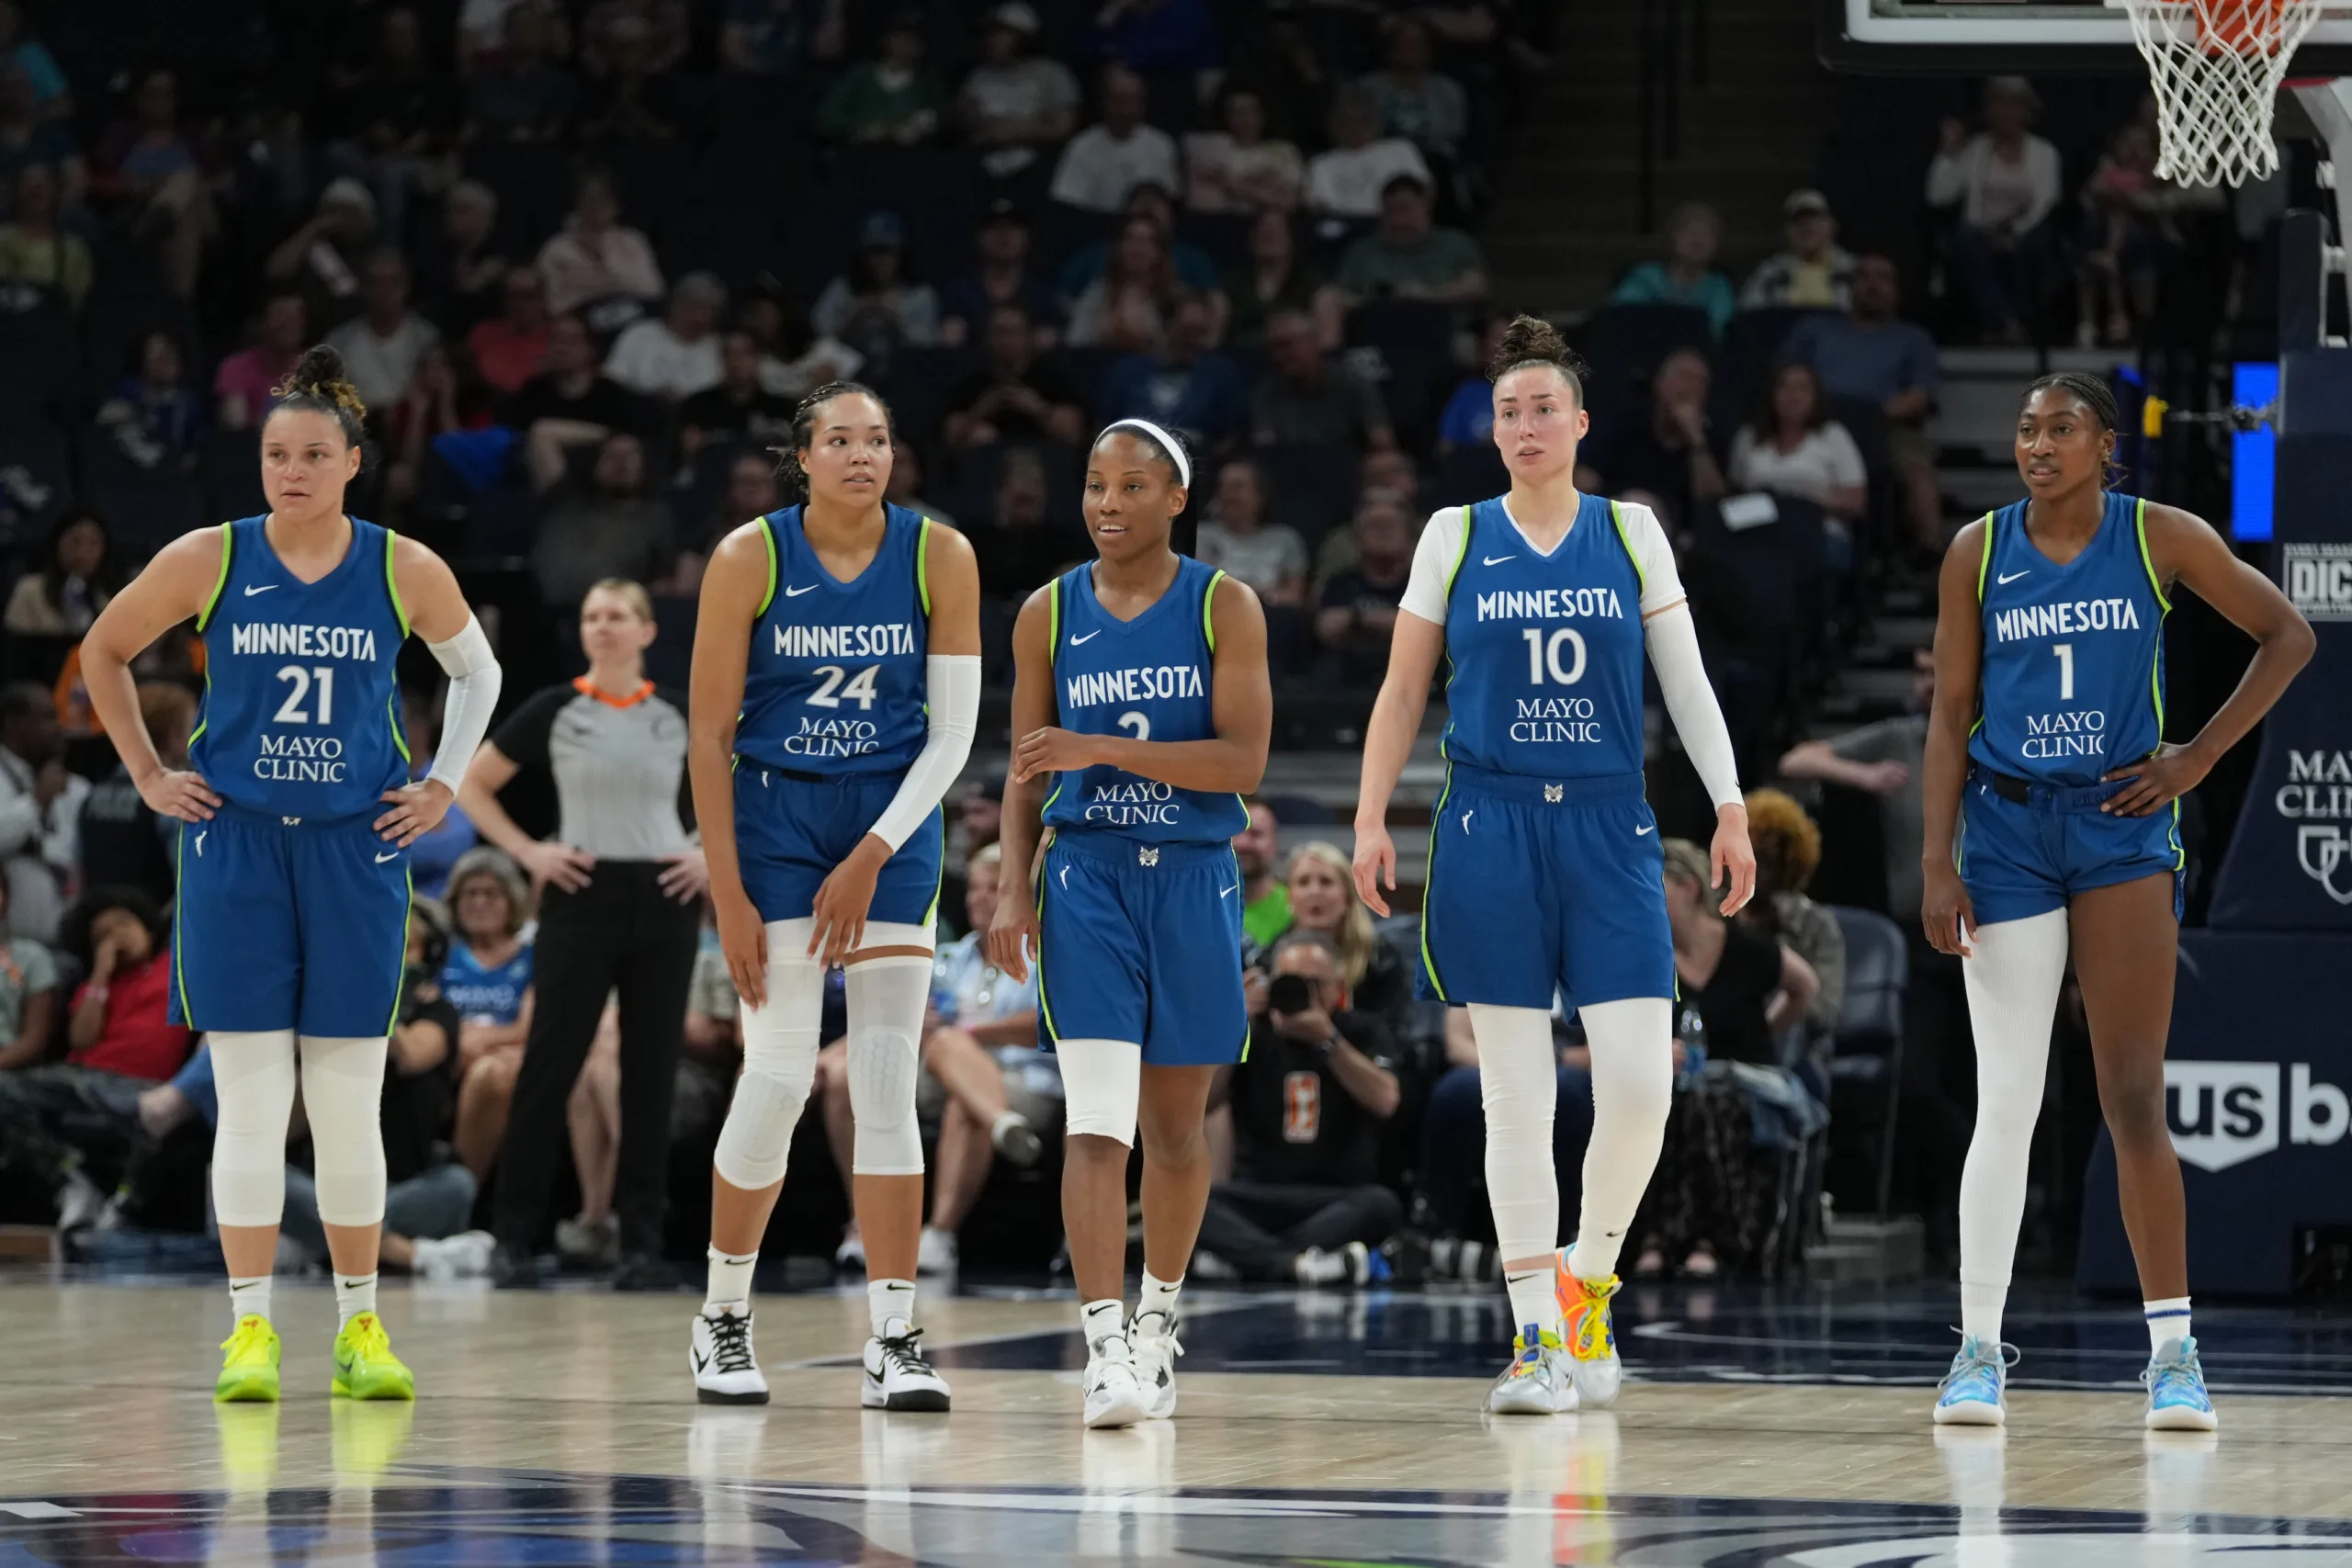 Minnesota Lynx basketball players in dark blue uniforms walk next to each other on a basketball court.